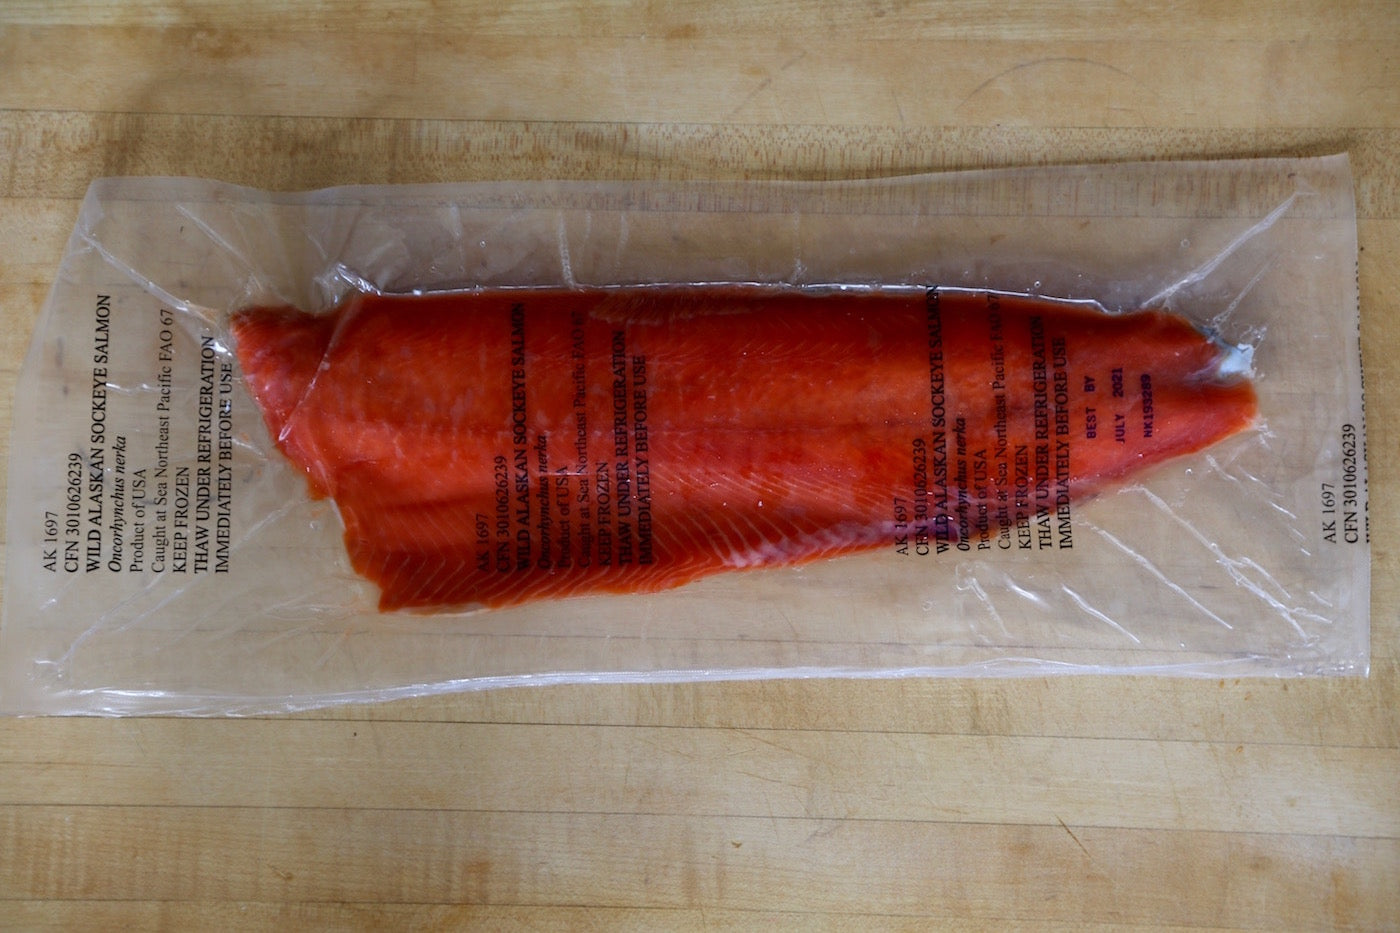 2023 Sockeye Salmon Fillets - One Share = 15 lbs    SUNSET PARK BROOKLYN NY PICKUP